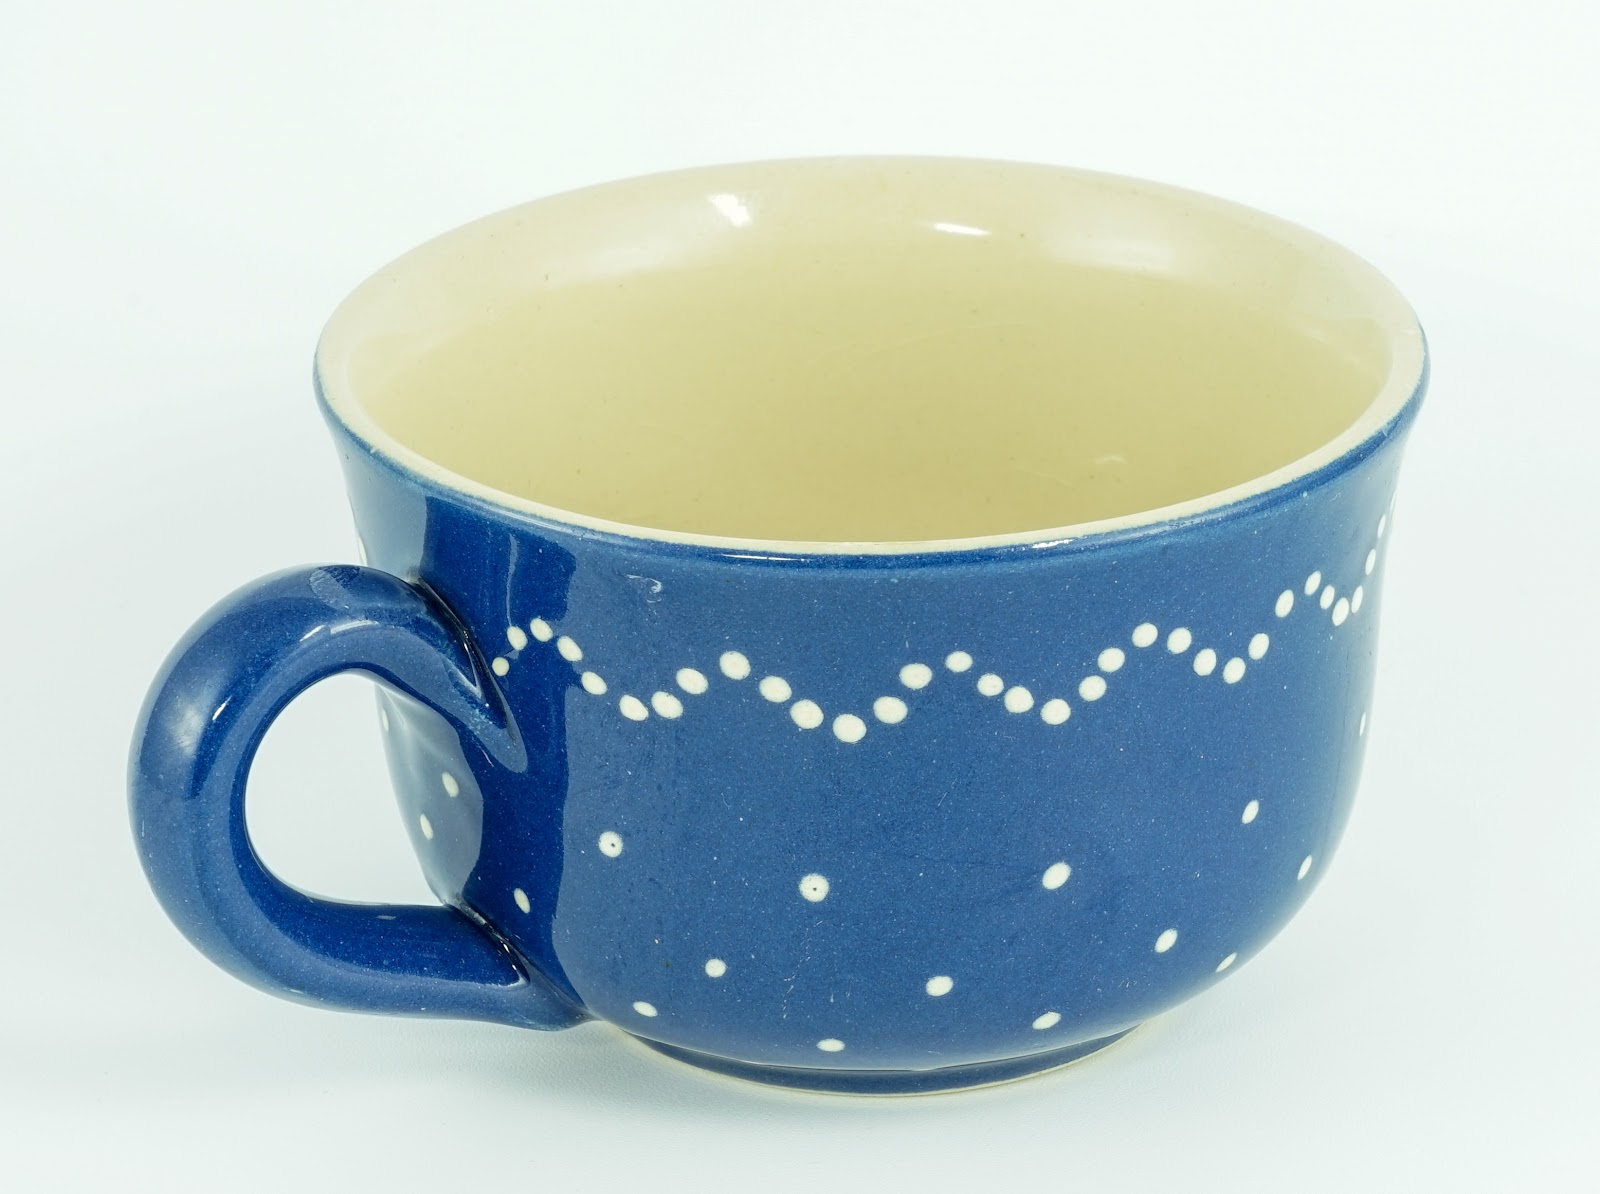 File:Ceramic cups DSC03538-2.jpg - Wikimedia Commons